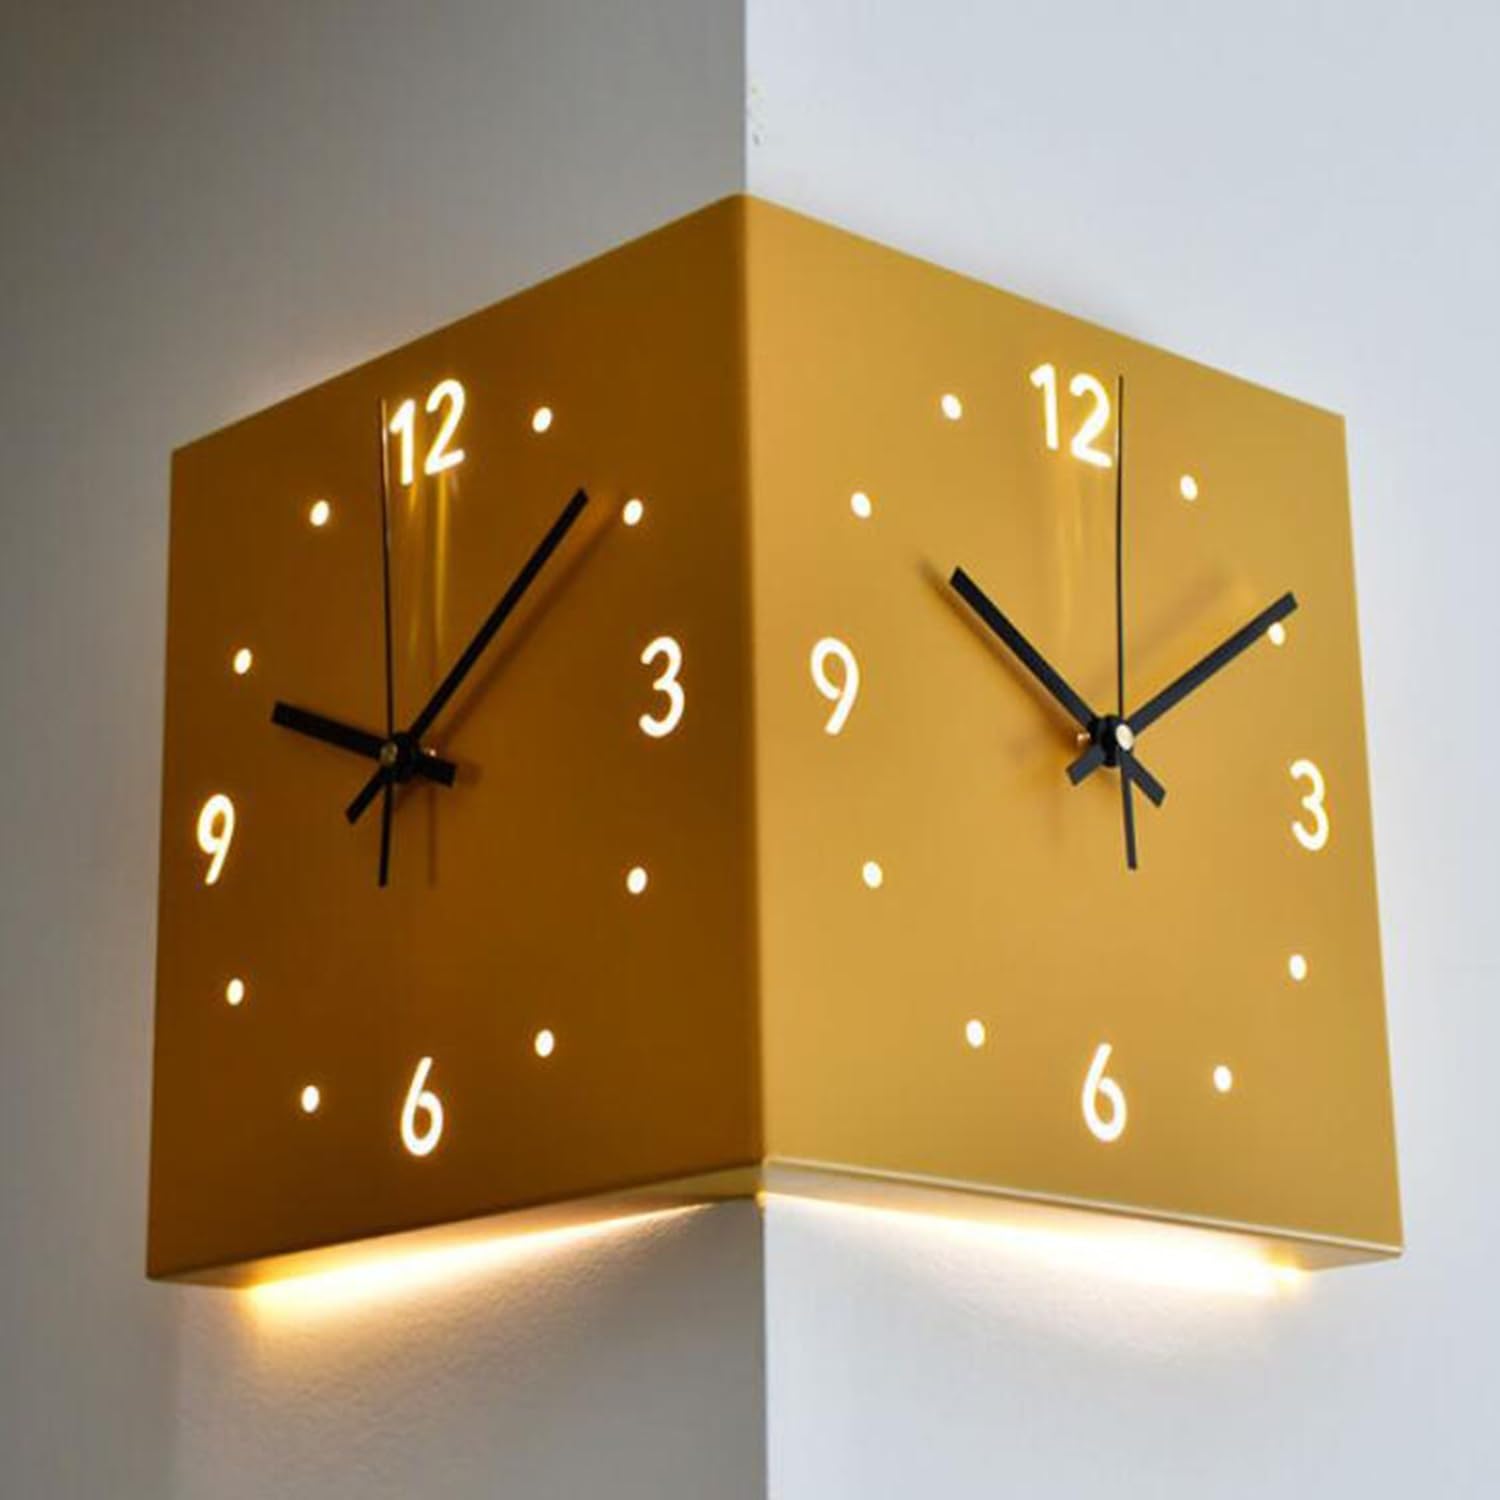 KYOFIS Double-Sided Corner Wall Clock